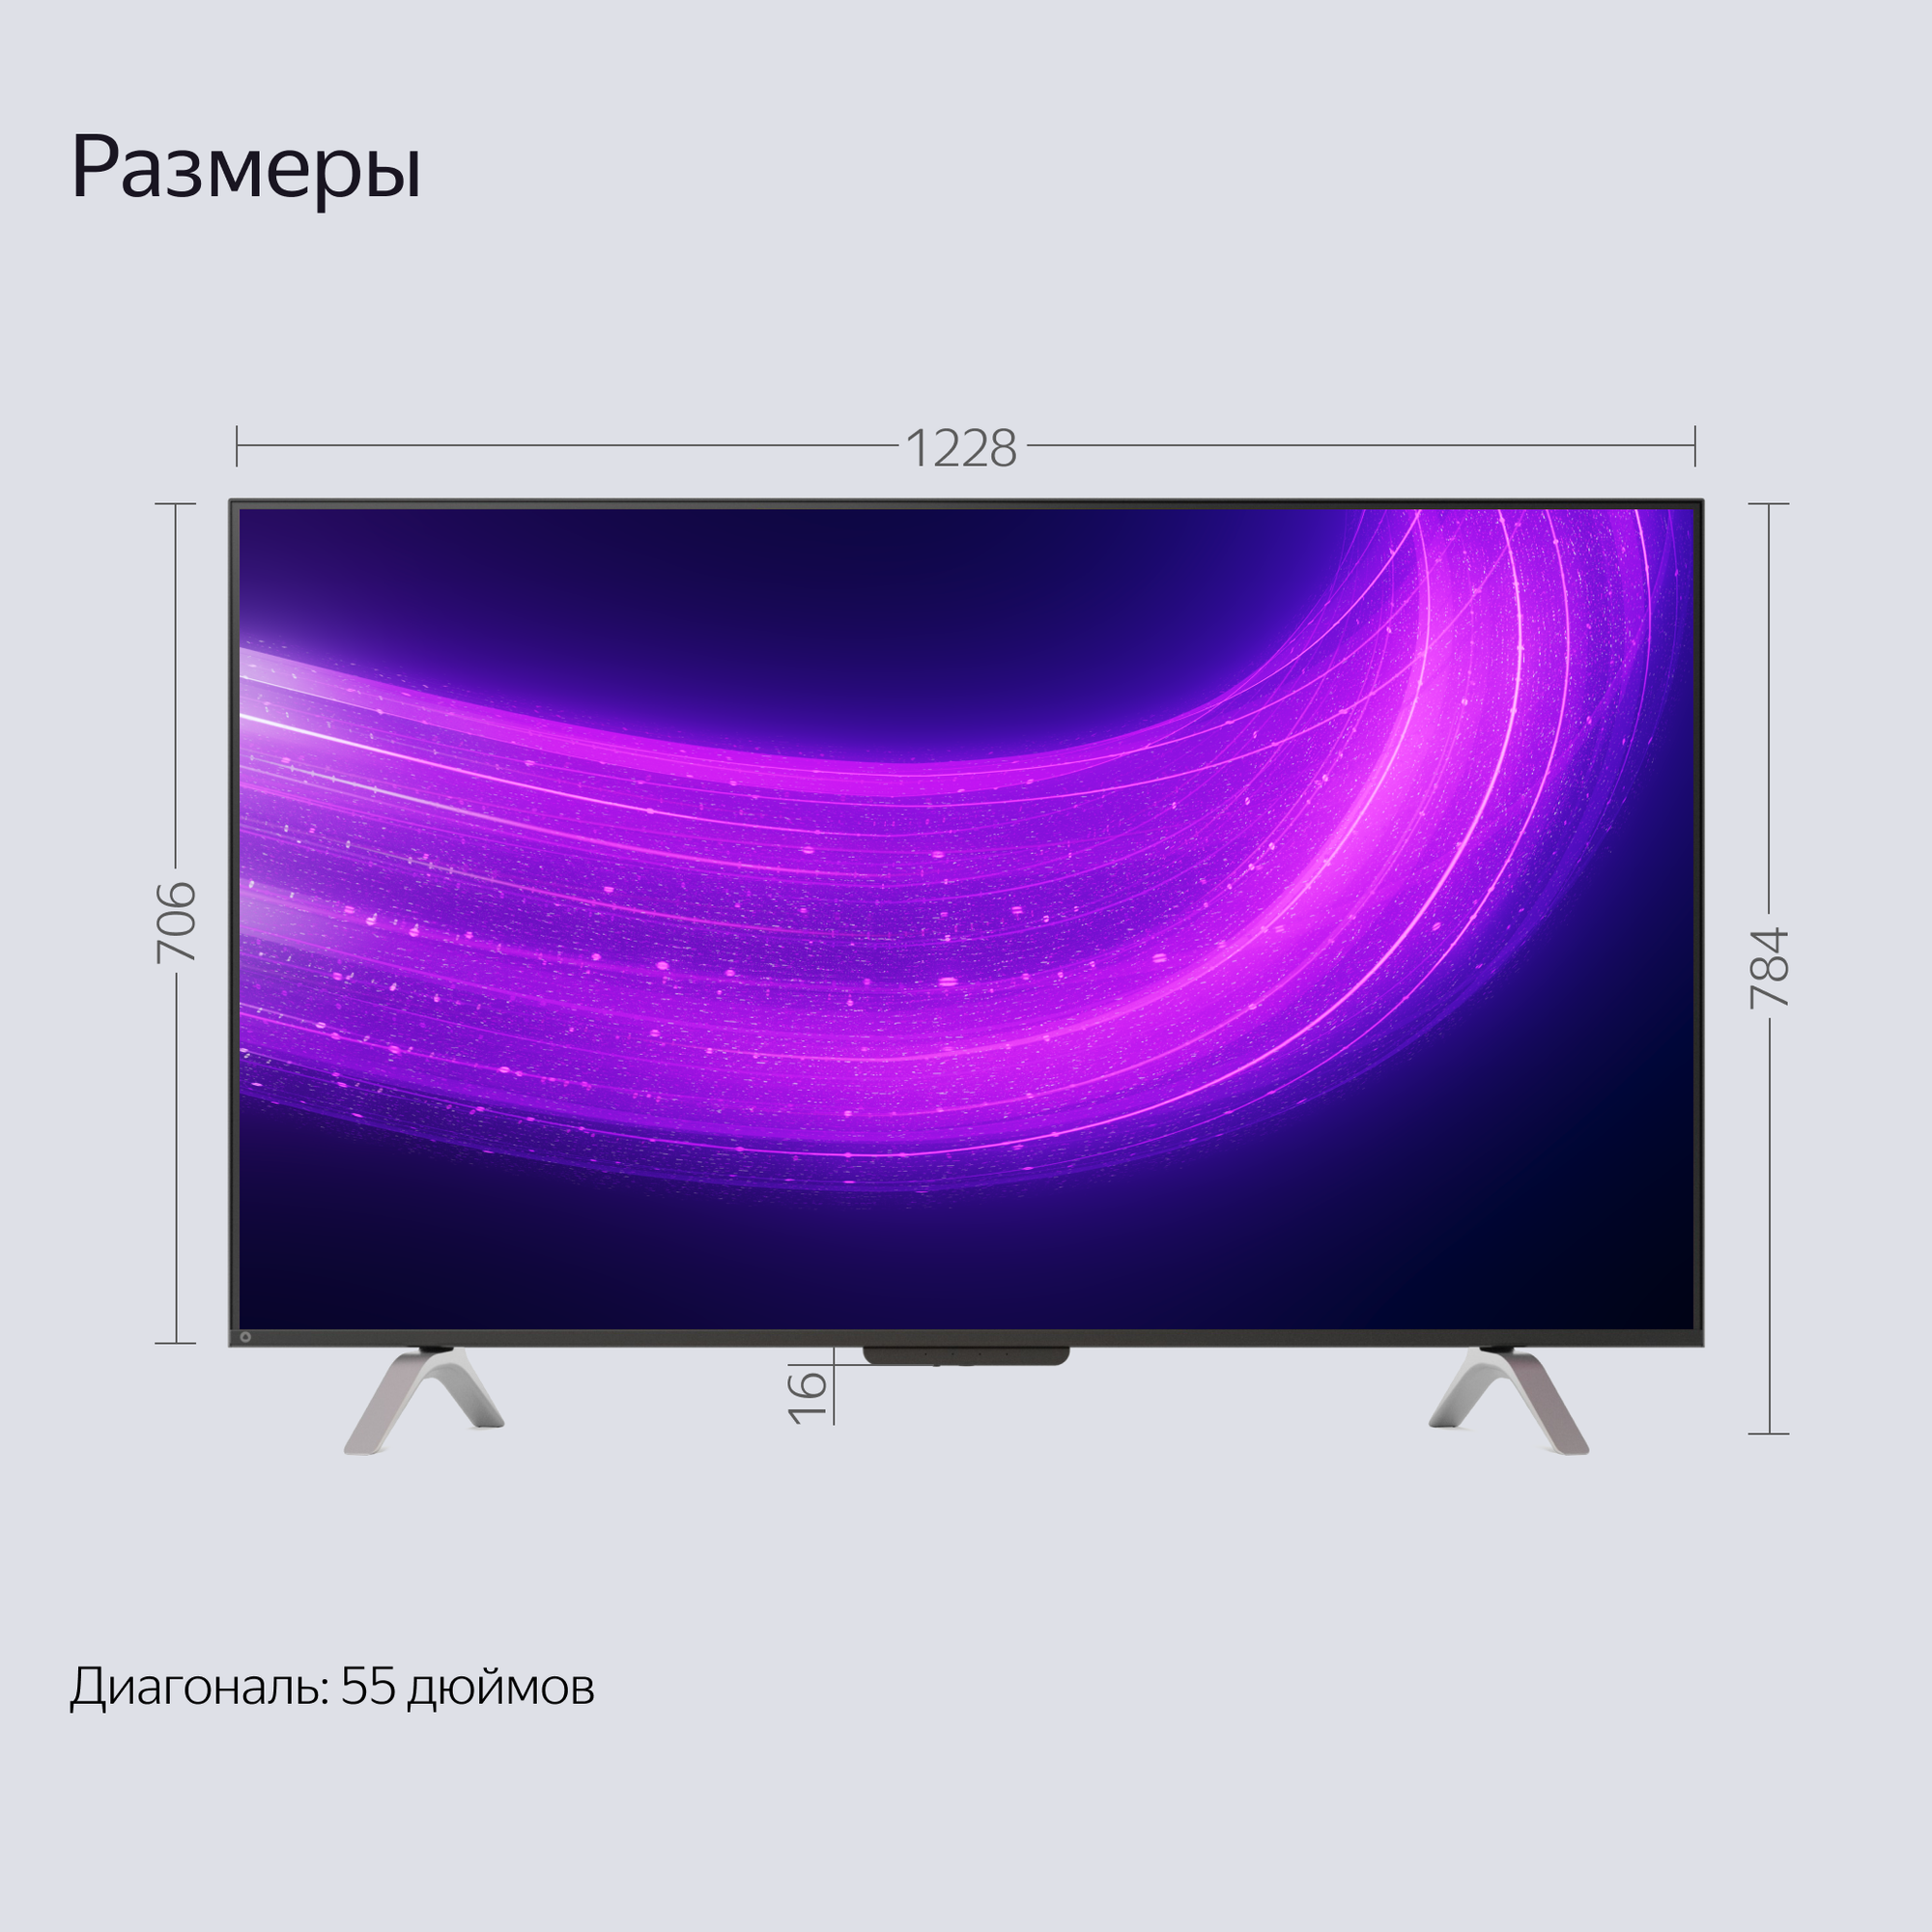 Яндекс ТВ Станция Про новый телевизор с Алисой 55’’